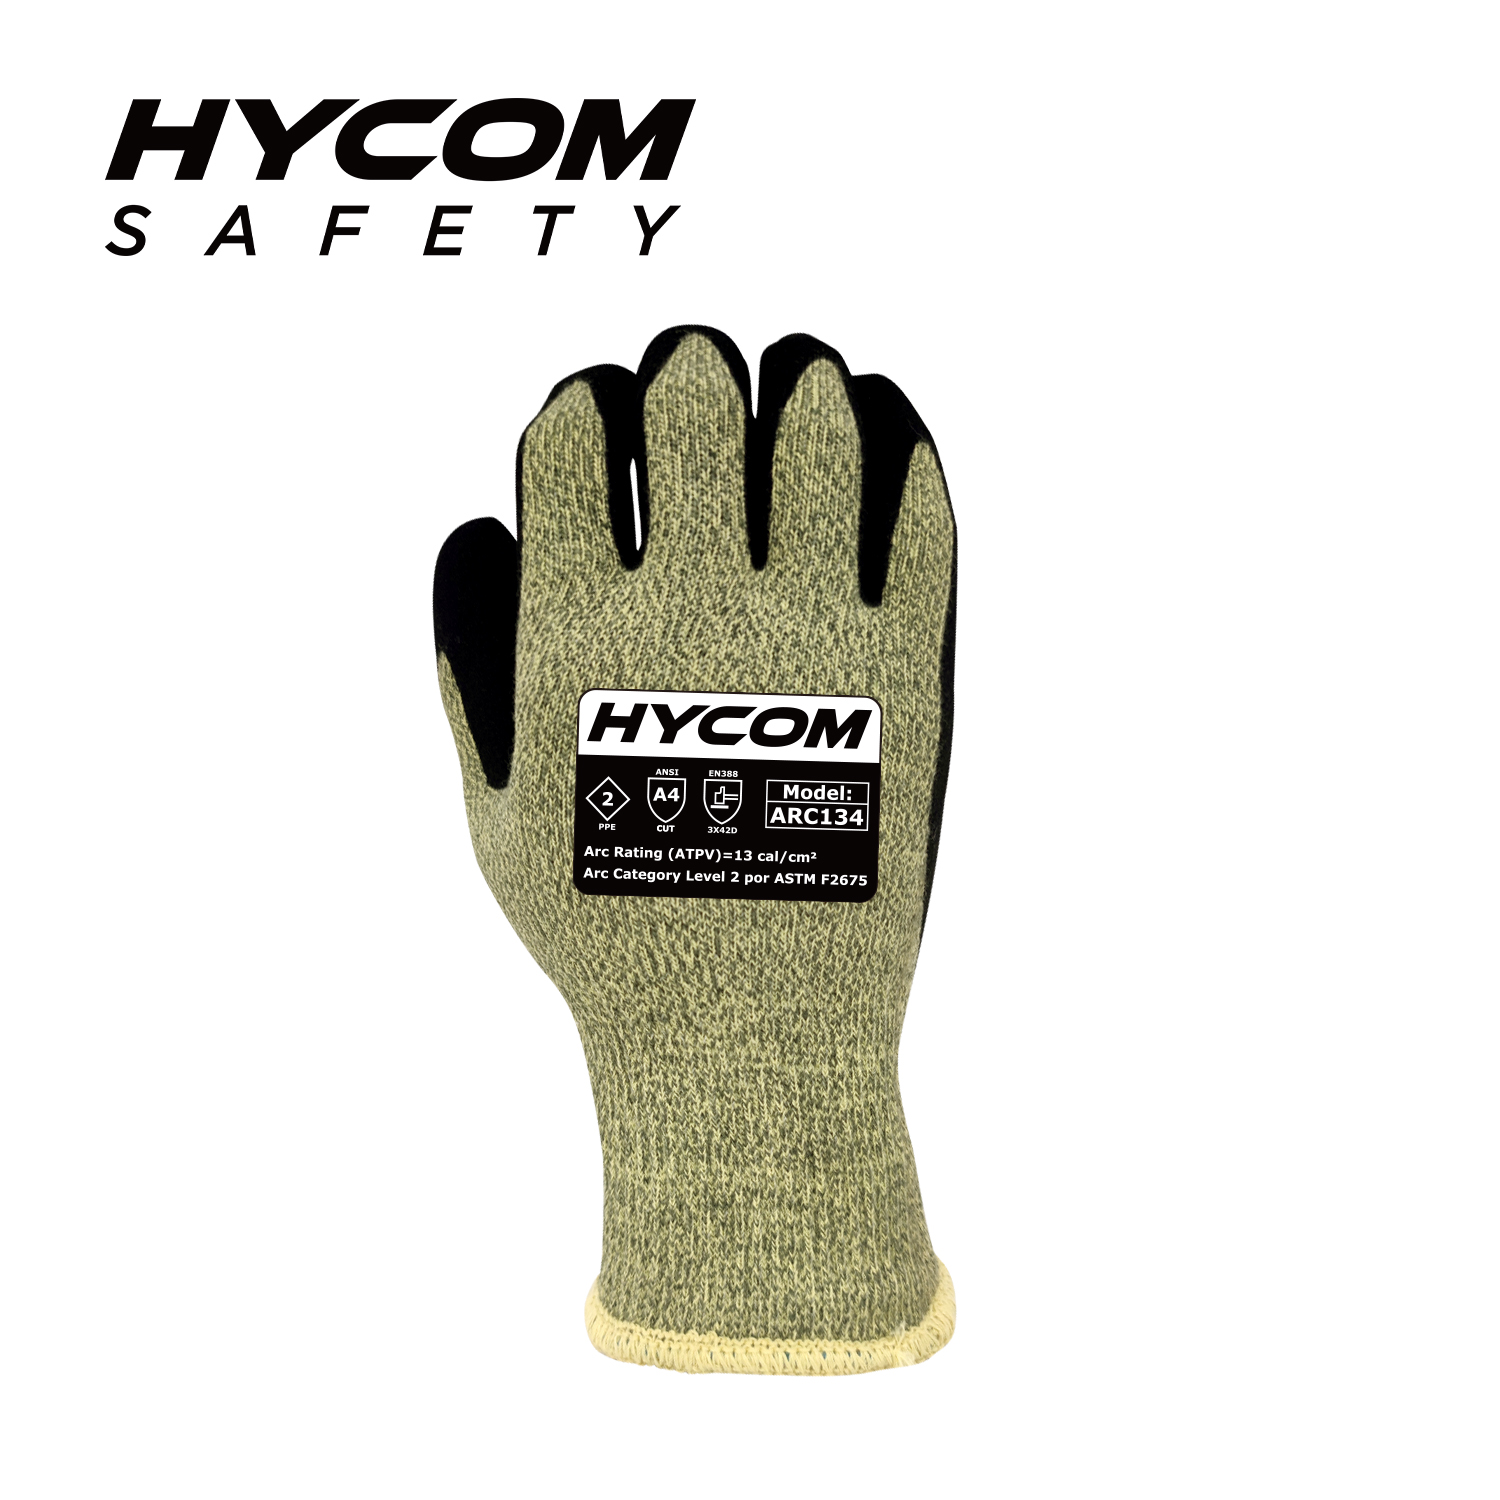 HYCOM Lichtbogenschlagfester Aramid-Handschuh mit Neoprenbeschichtung ATPV 13cal/cm² PSA-Handschuhe